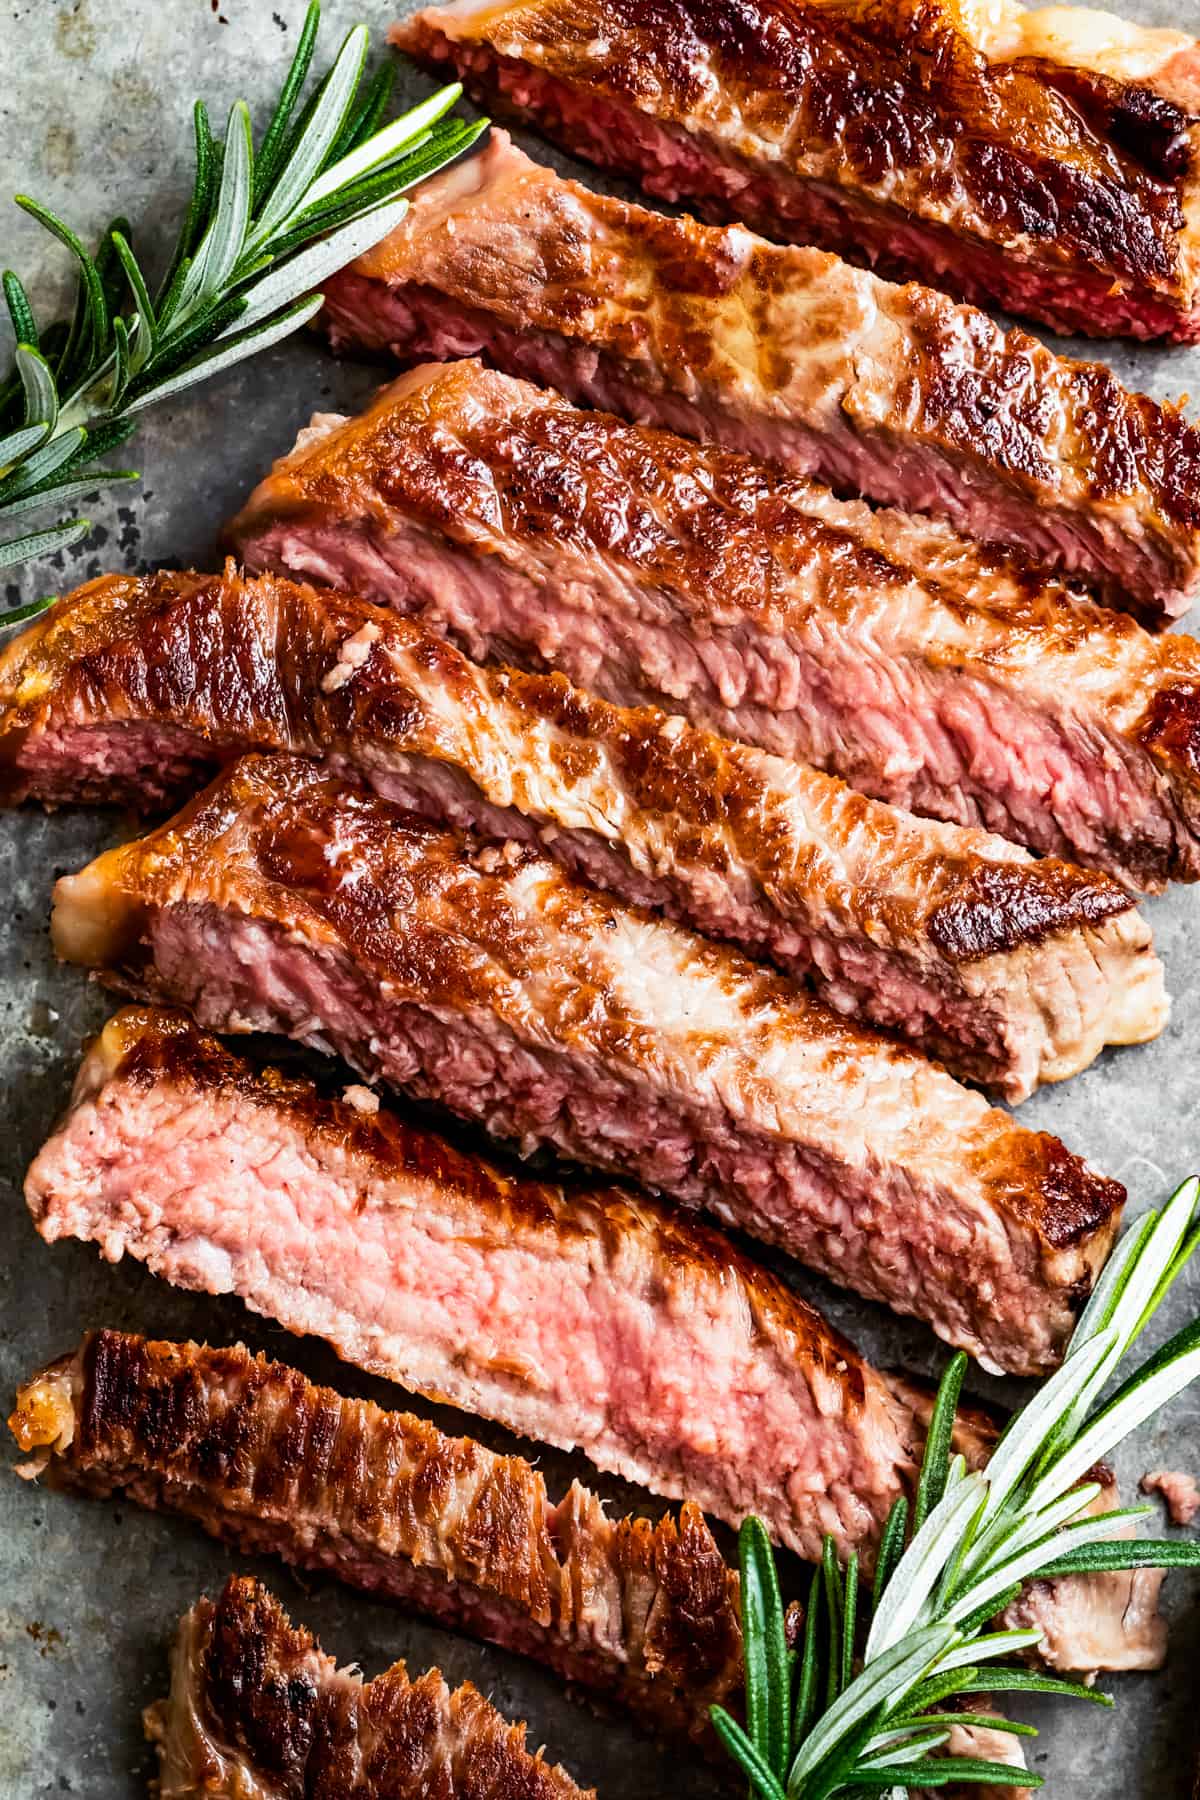 Sliced New York strip steak with fresh rosemary sprigs set next to it.